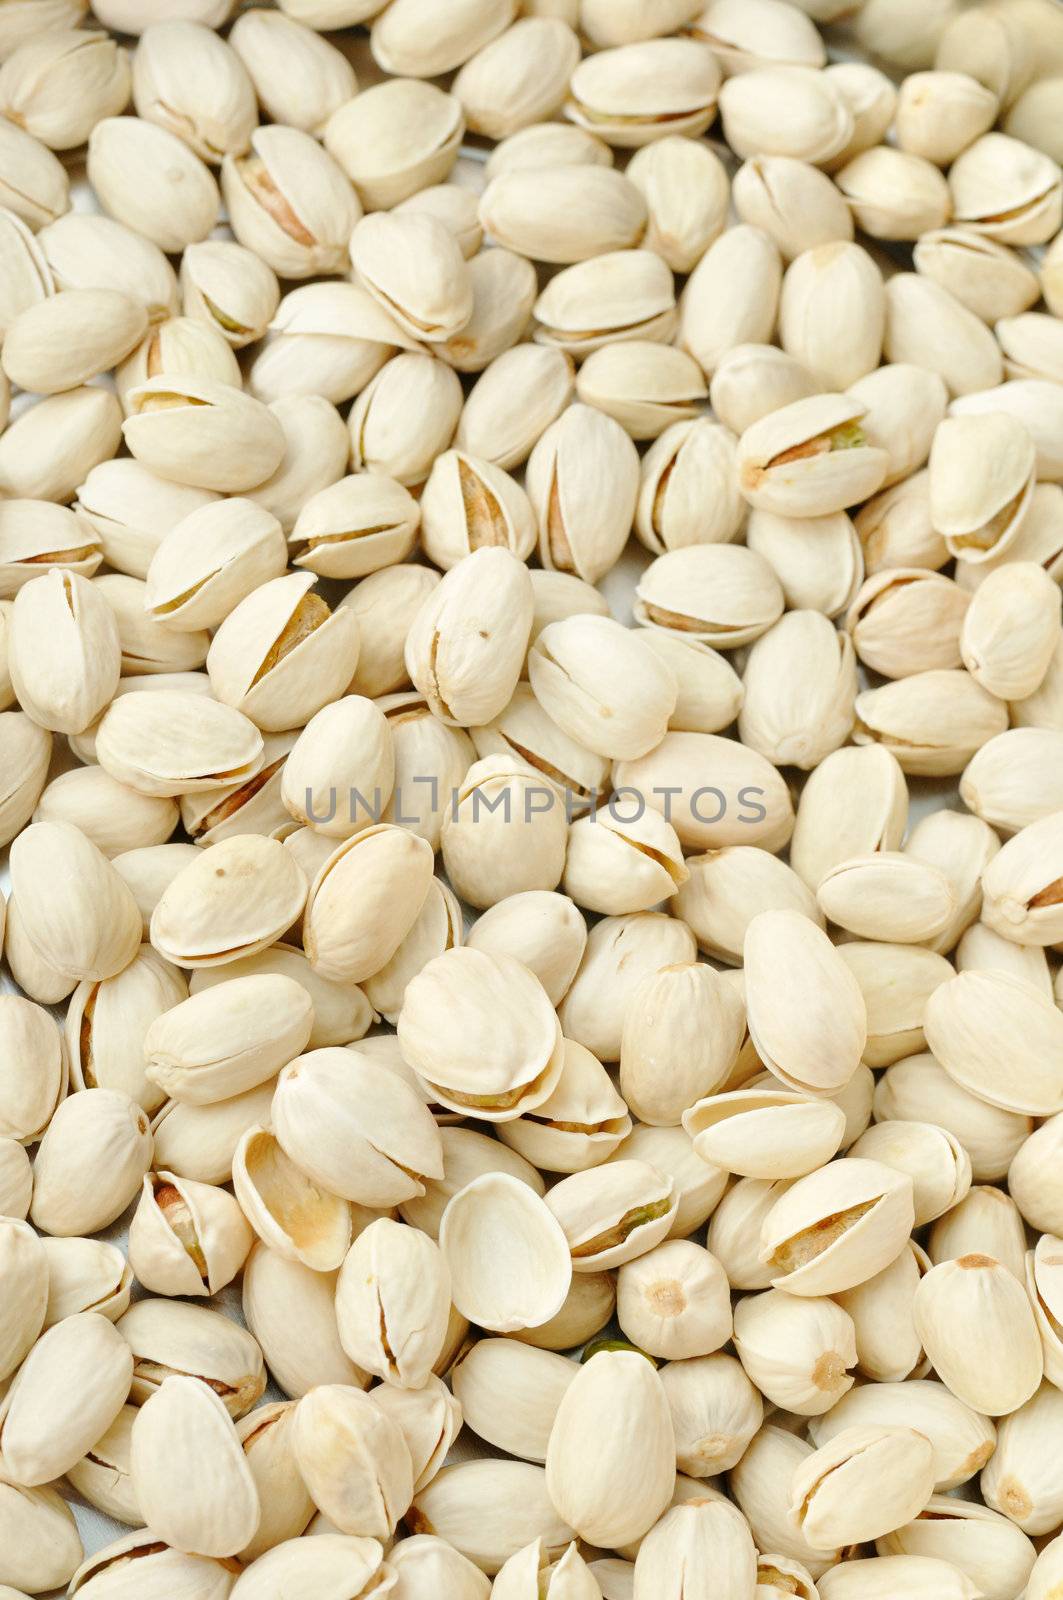 Pistachio Nuts Snack Pieces as a Big Pile